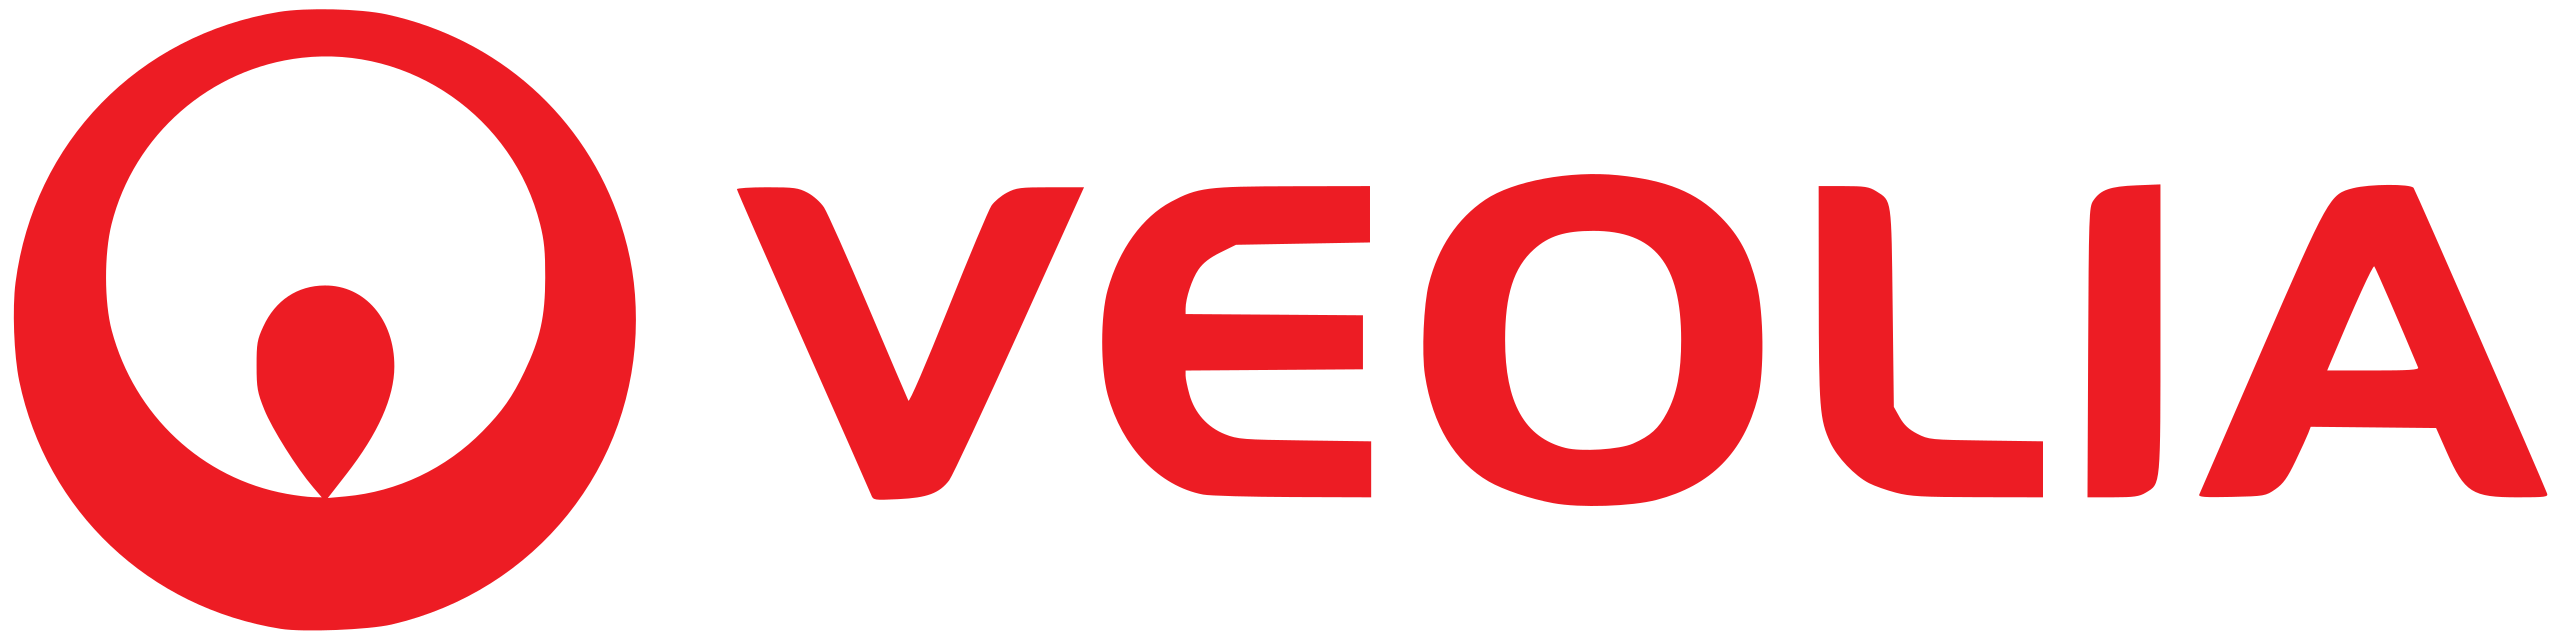 Snowlab - Veolia logo